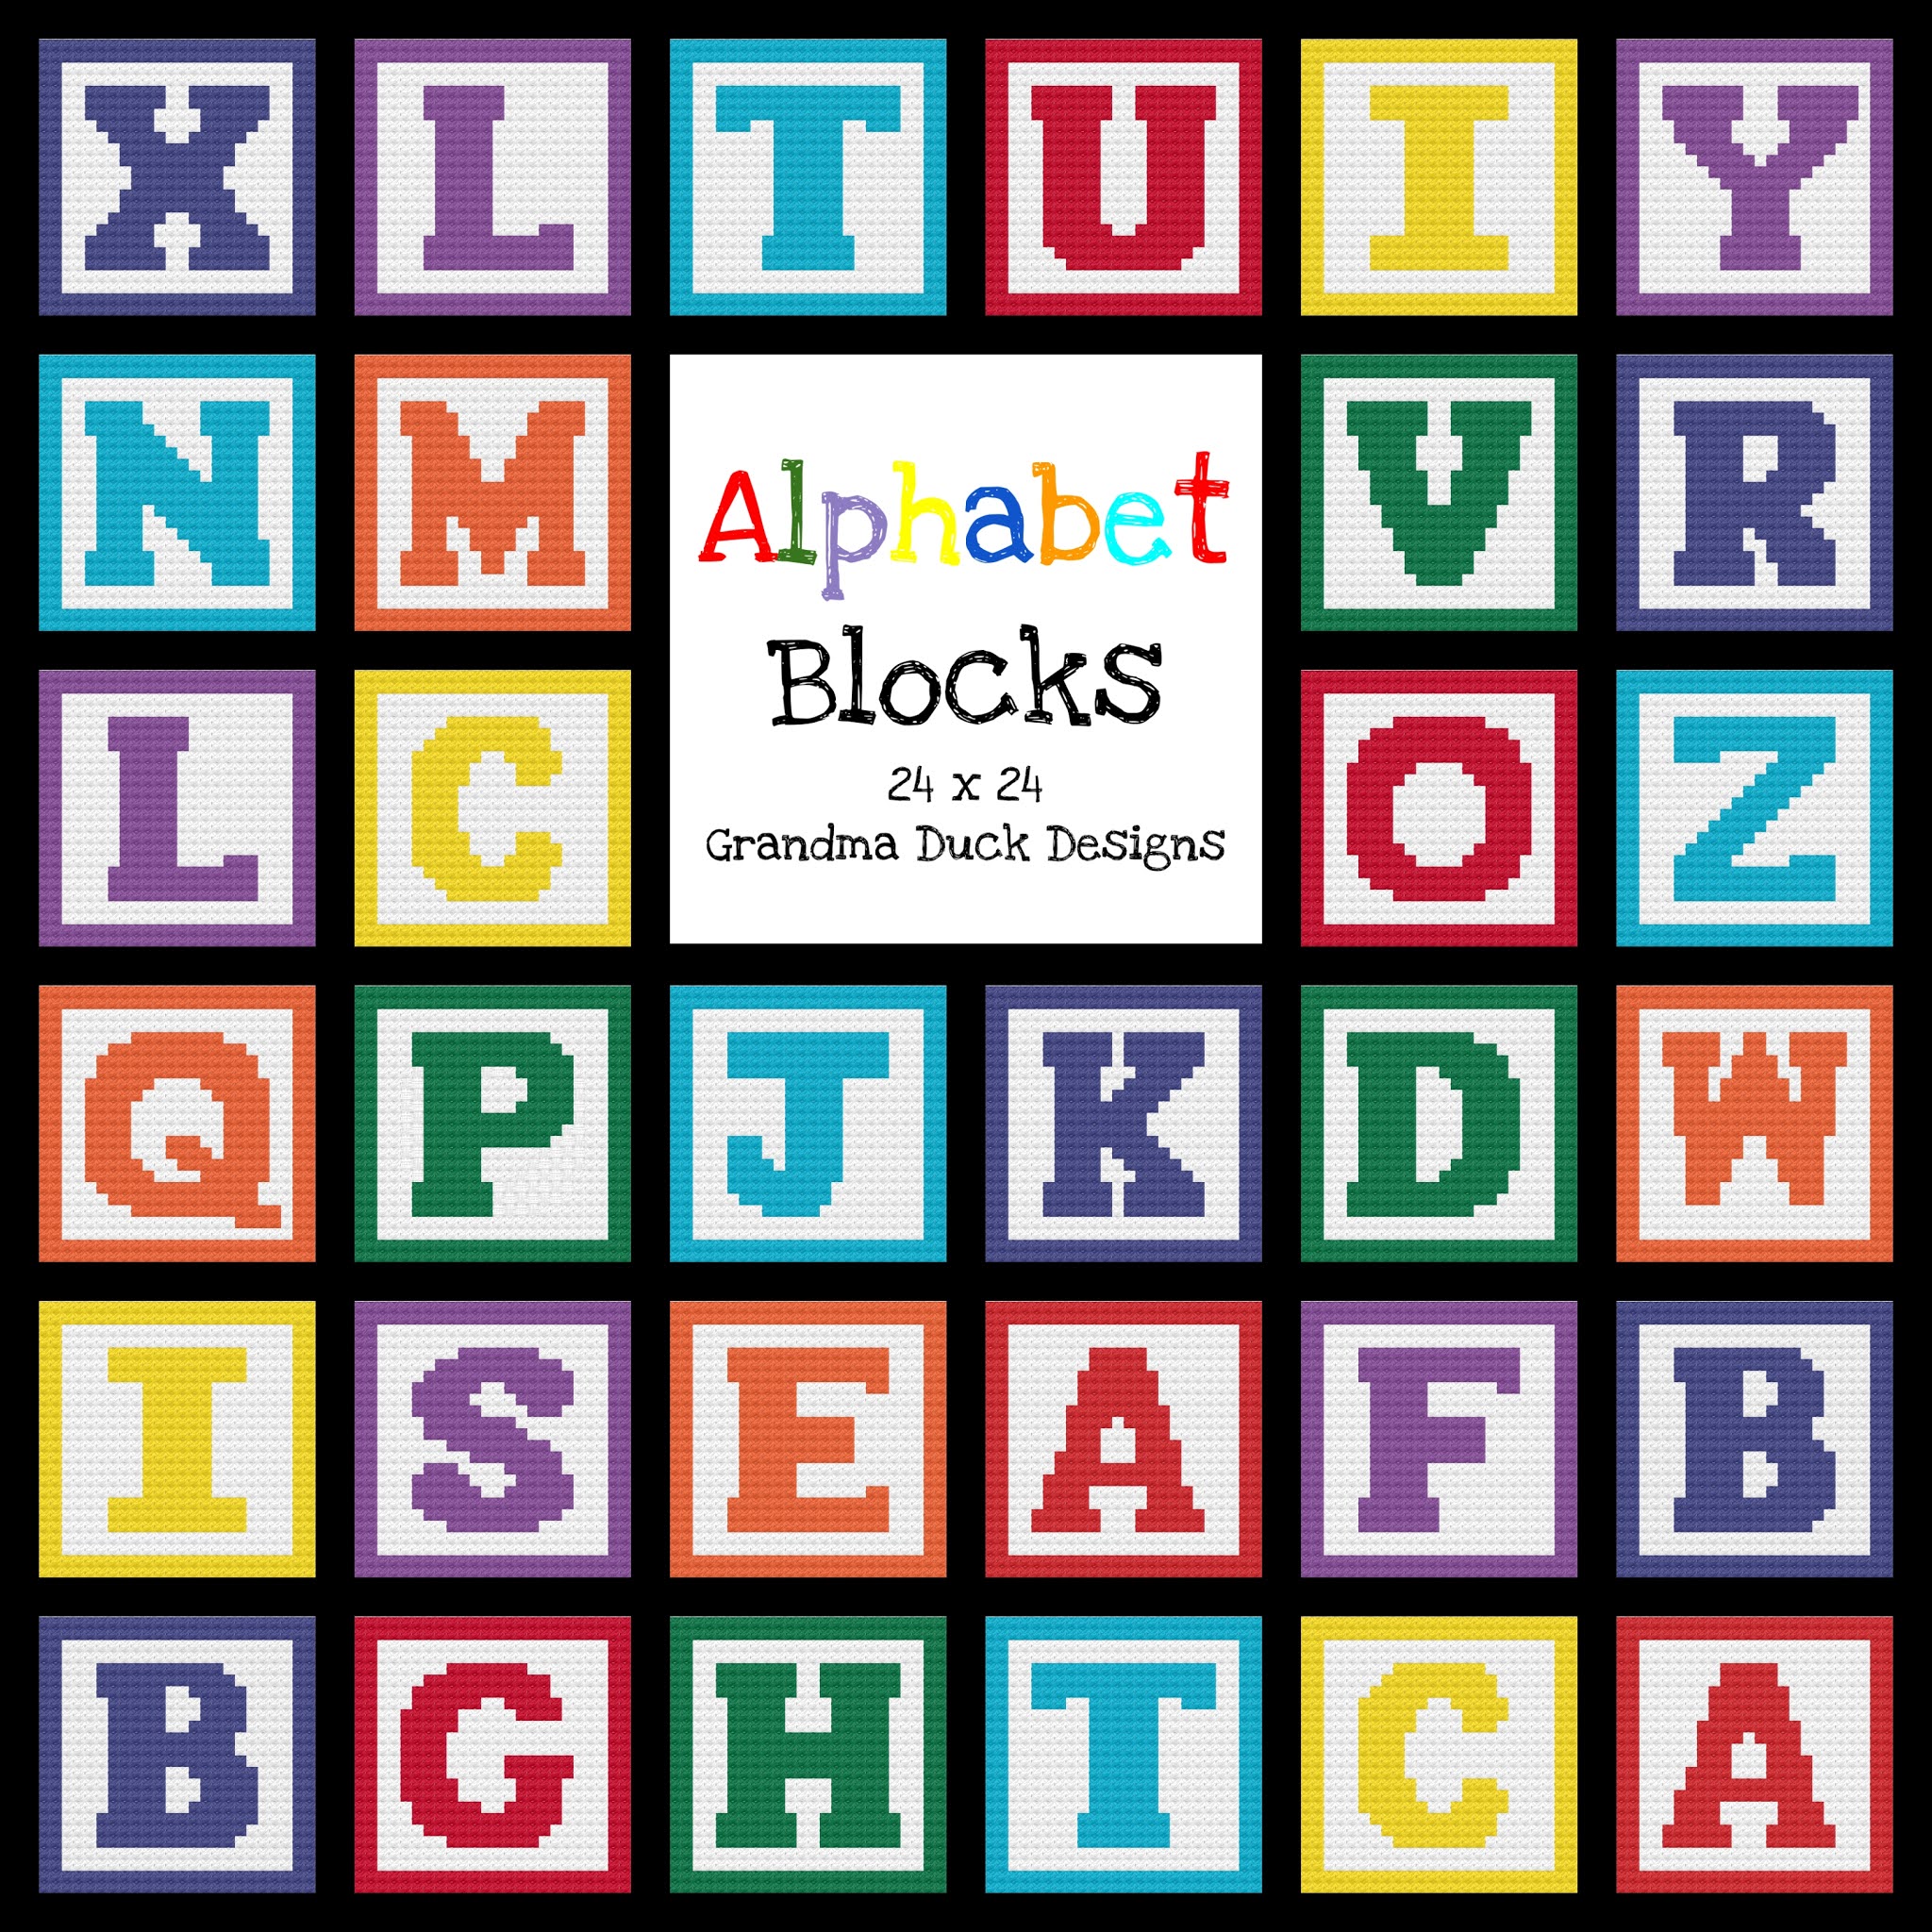 grandma-duck-designs-alphabet-blocks